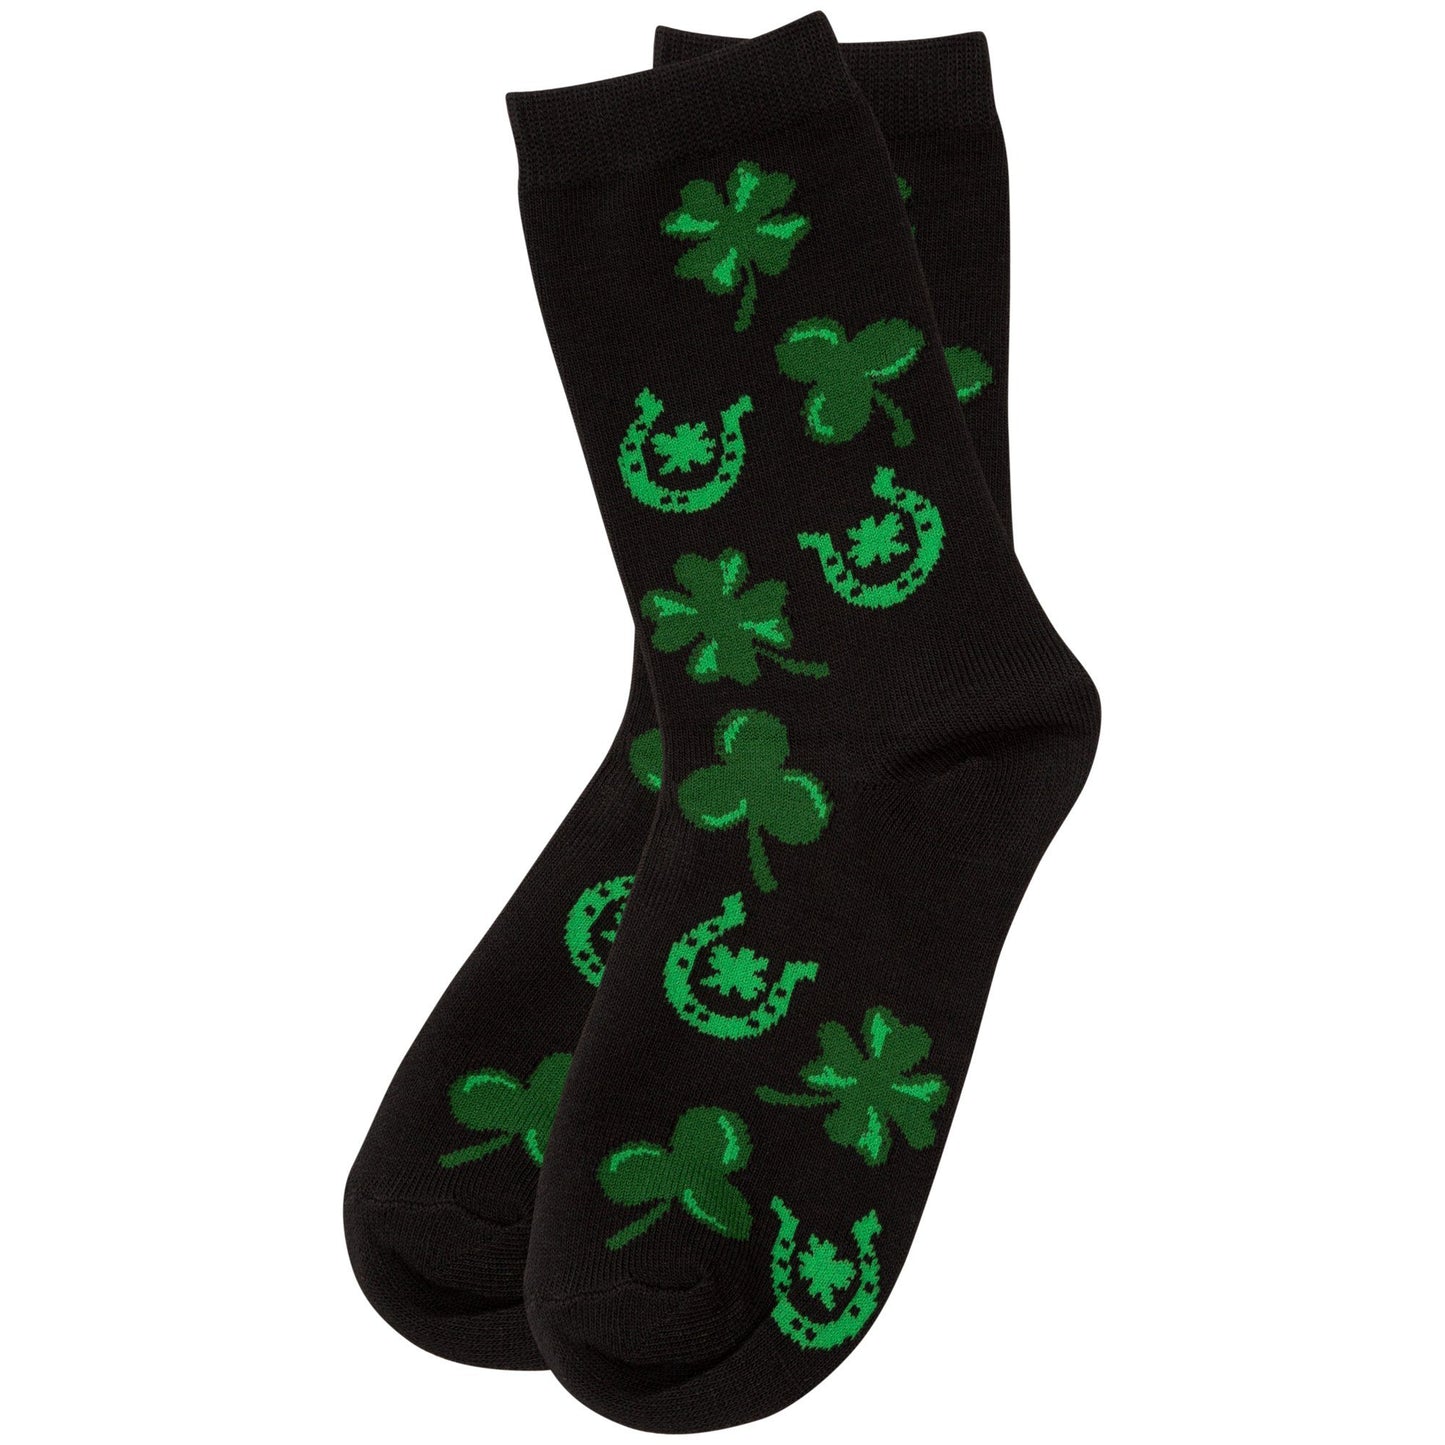 Luck of the Irish Socks